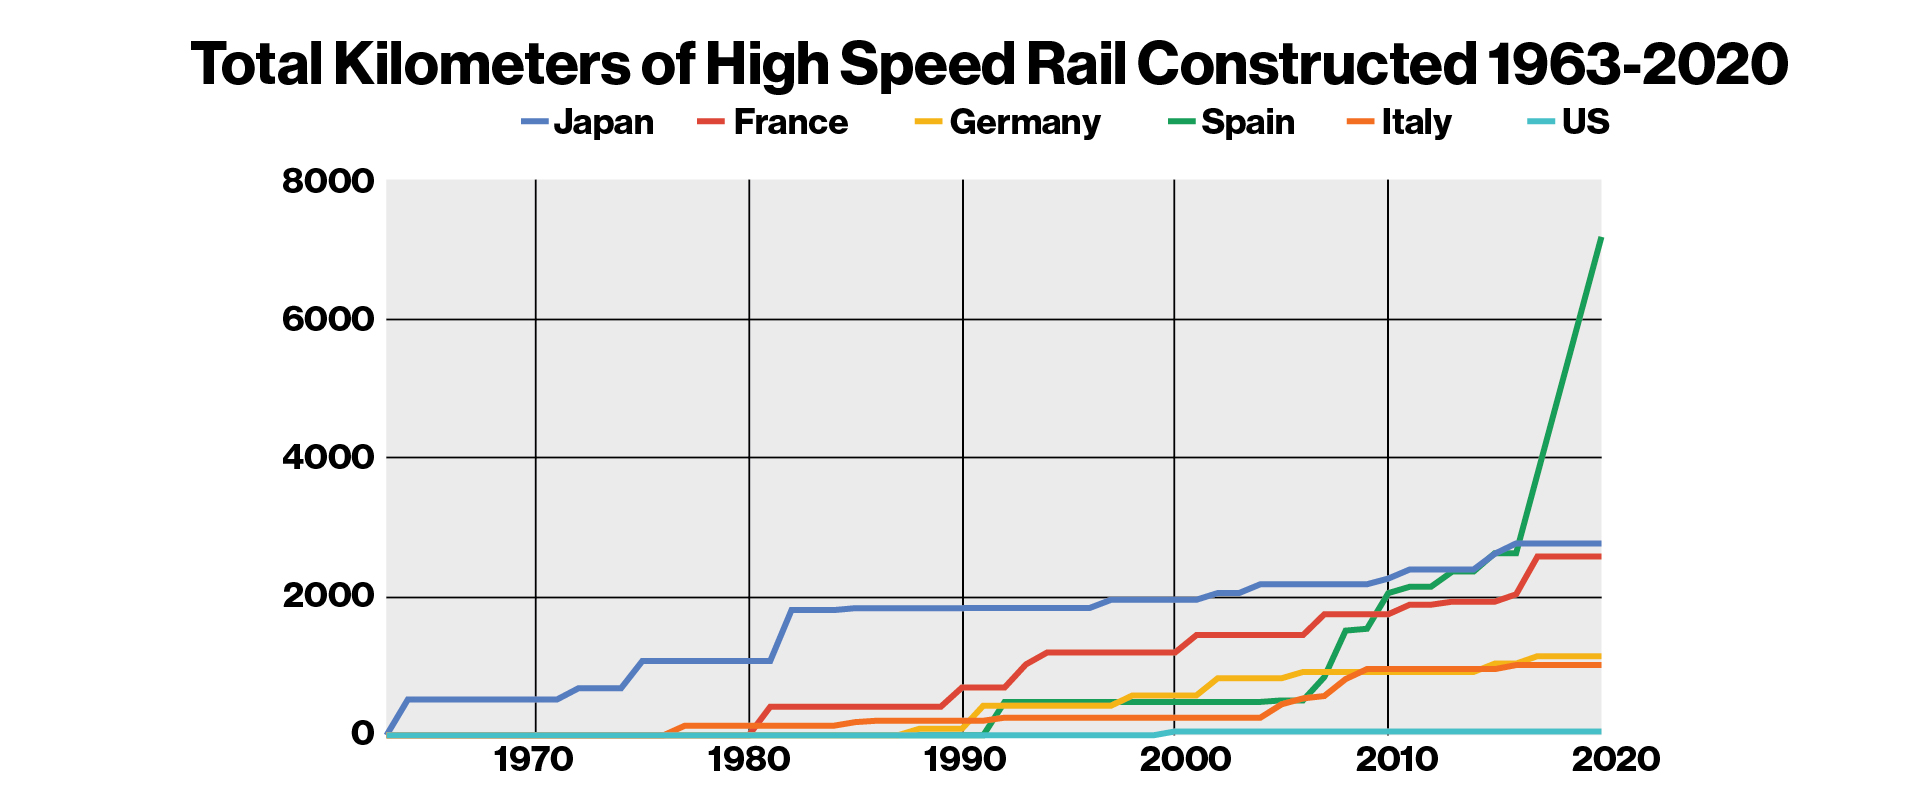 High Speed Rail construction